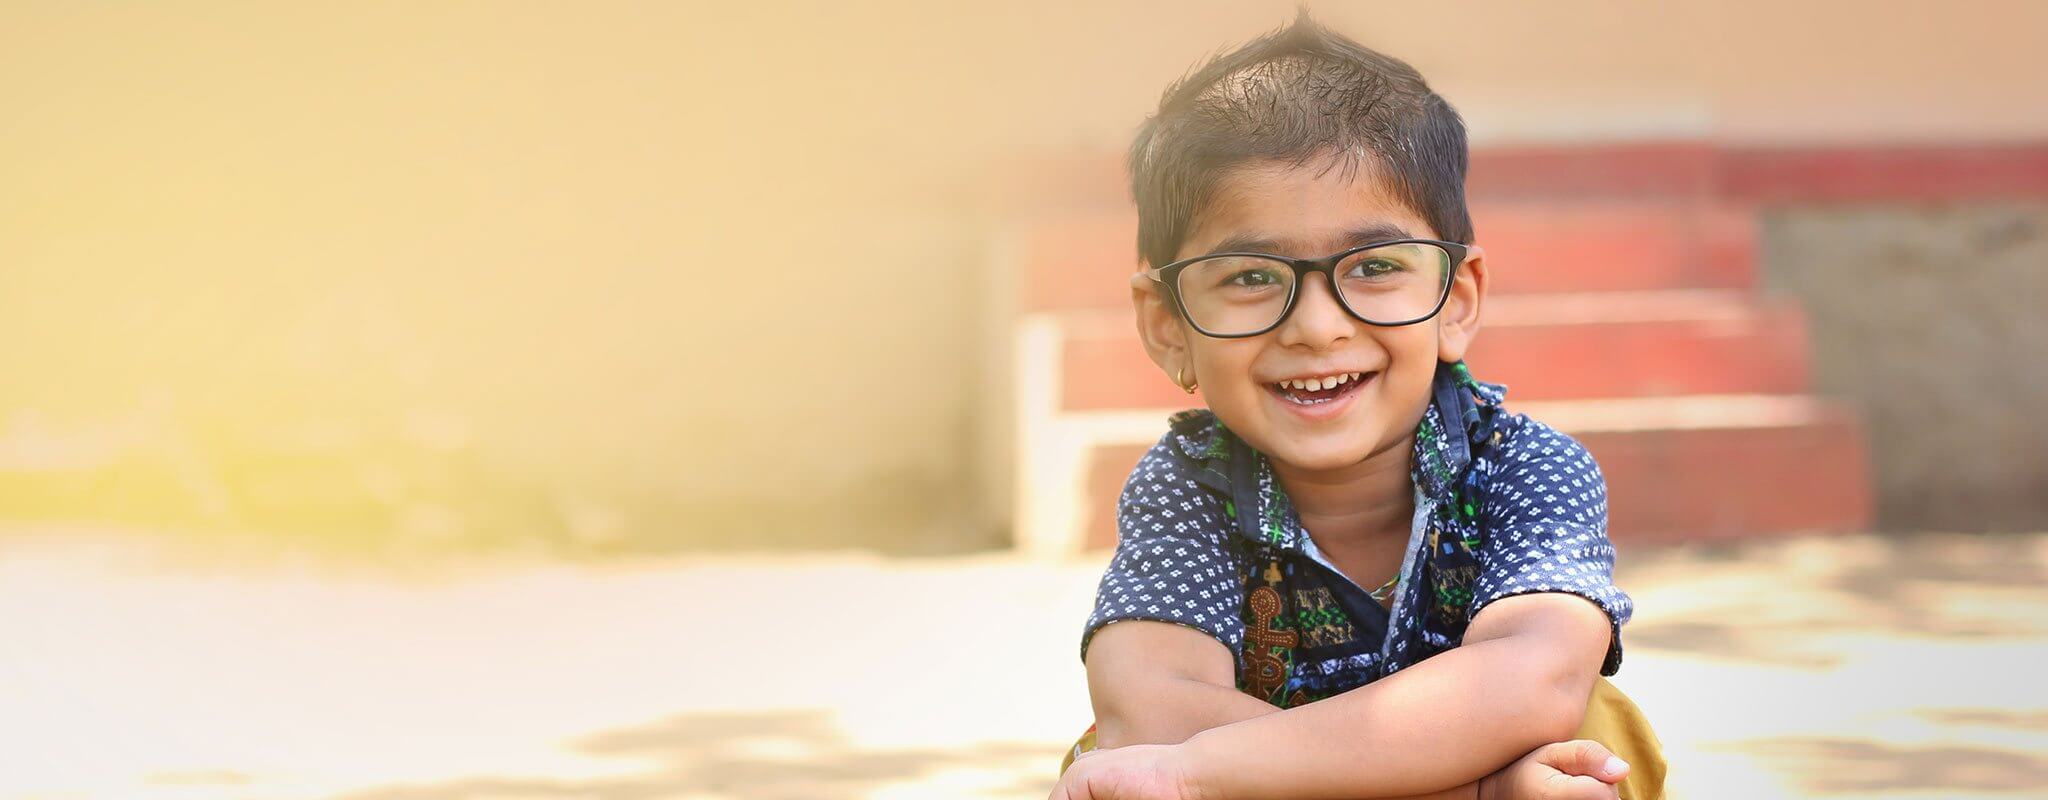 Indian boy wearing glasses Banner image for Gwinnett Pediatrics and Adolescent Medicine, Gwinnett Pediatricians